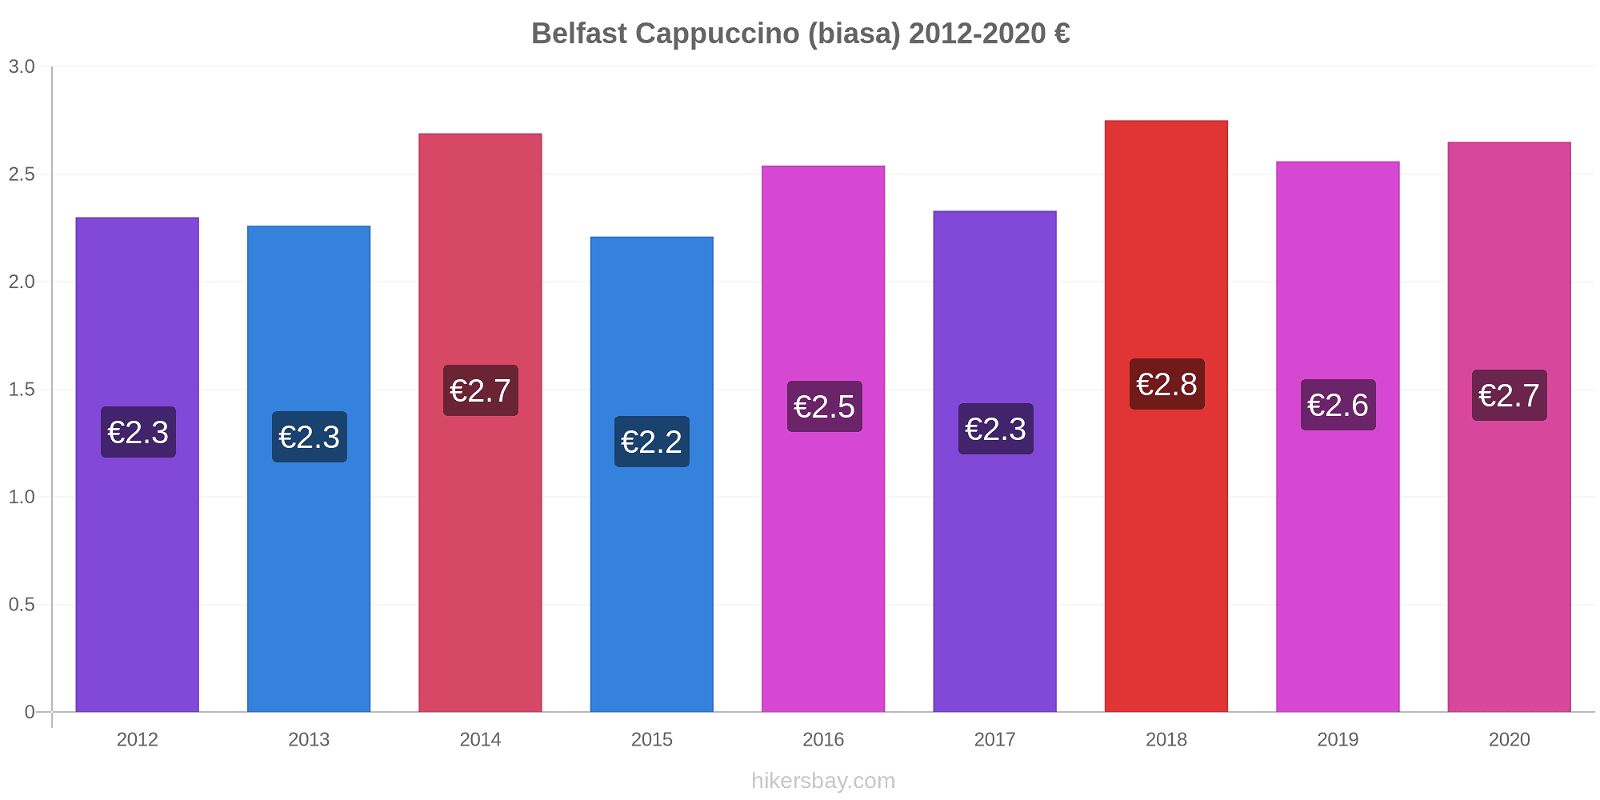 Belfast perubahan harga Cappuccino (biasa) hikersbay.com